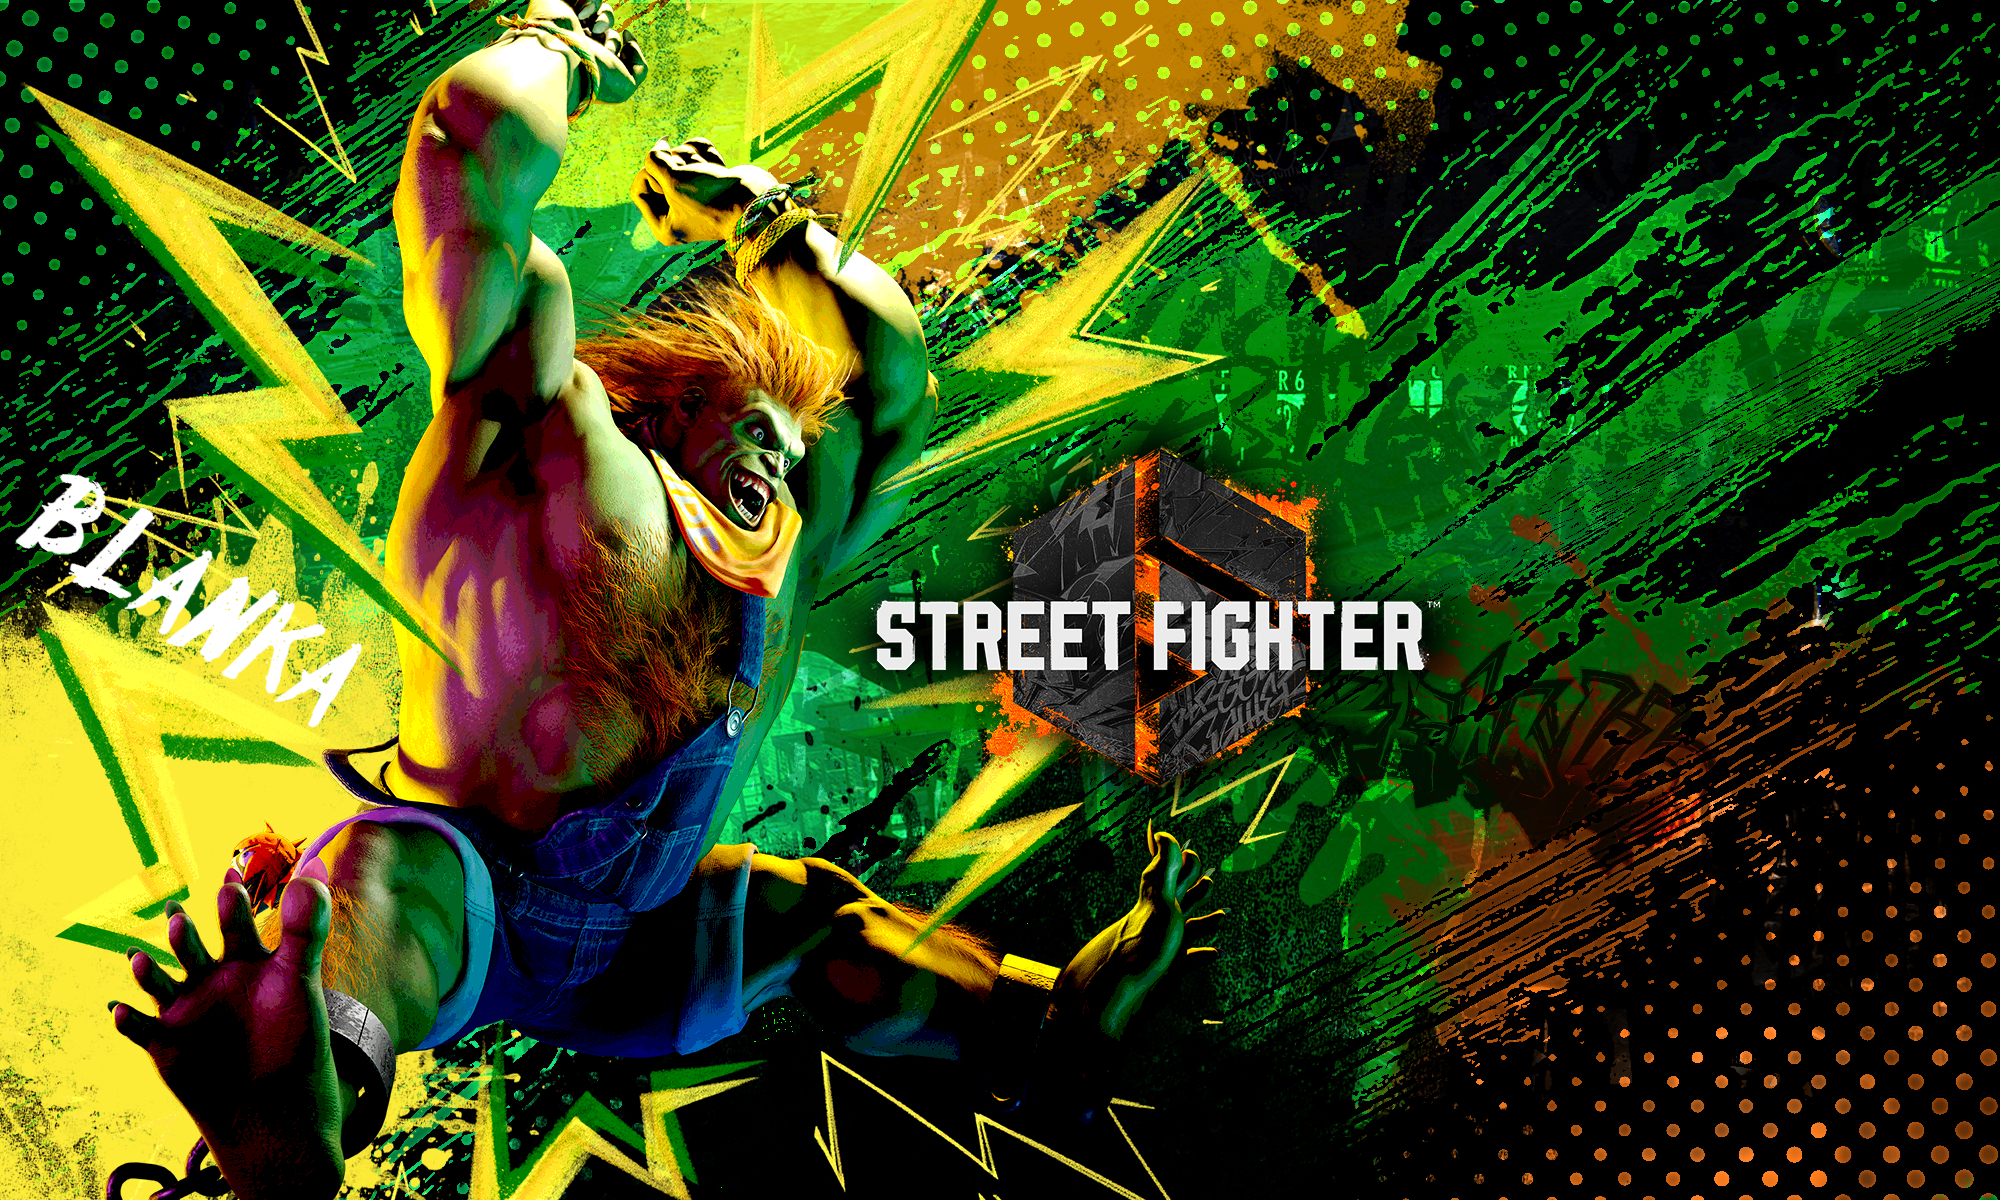 Street Fighter 6 - Blanka wallpaper by DaKidGaming on DeviantArt